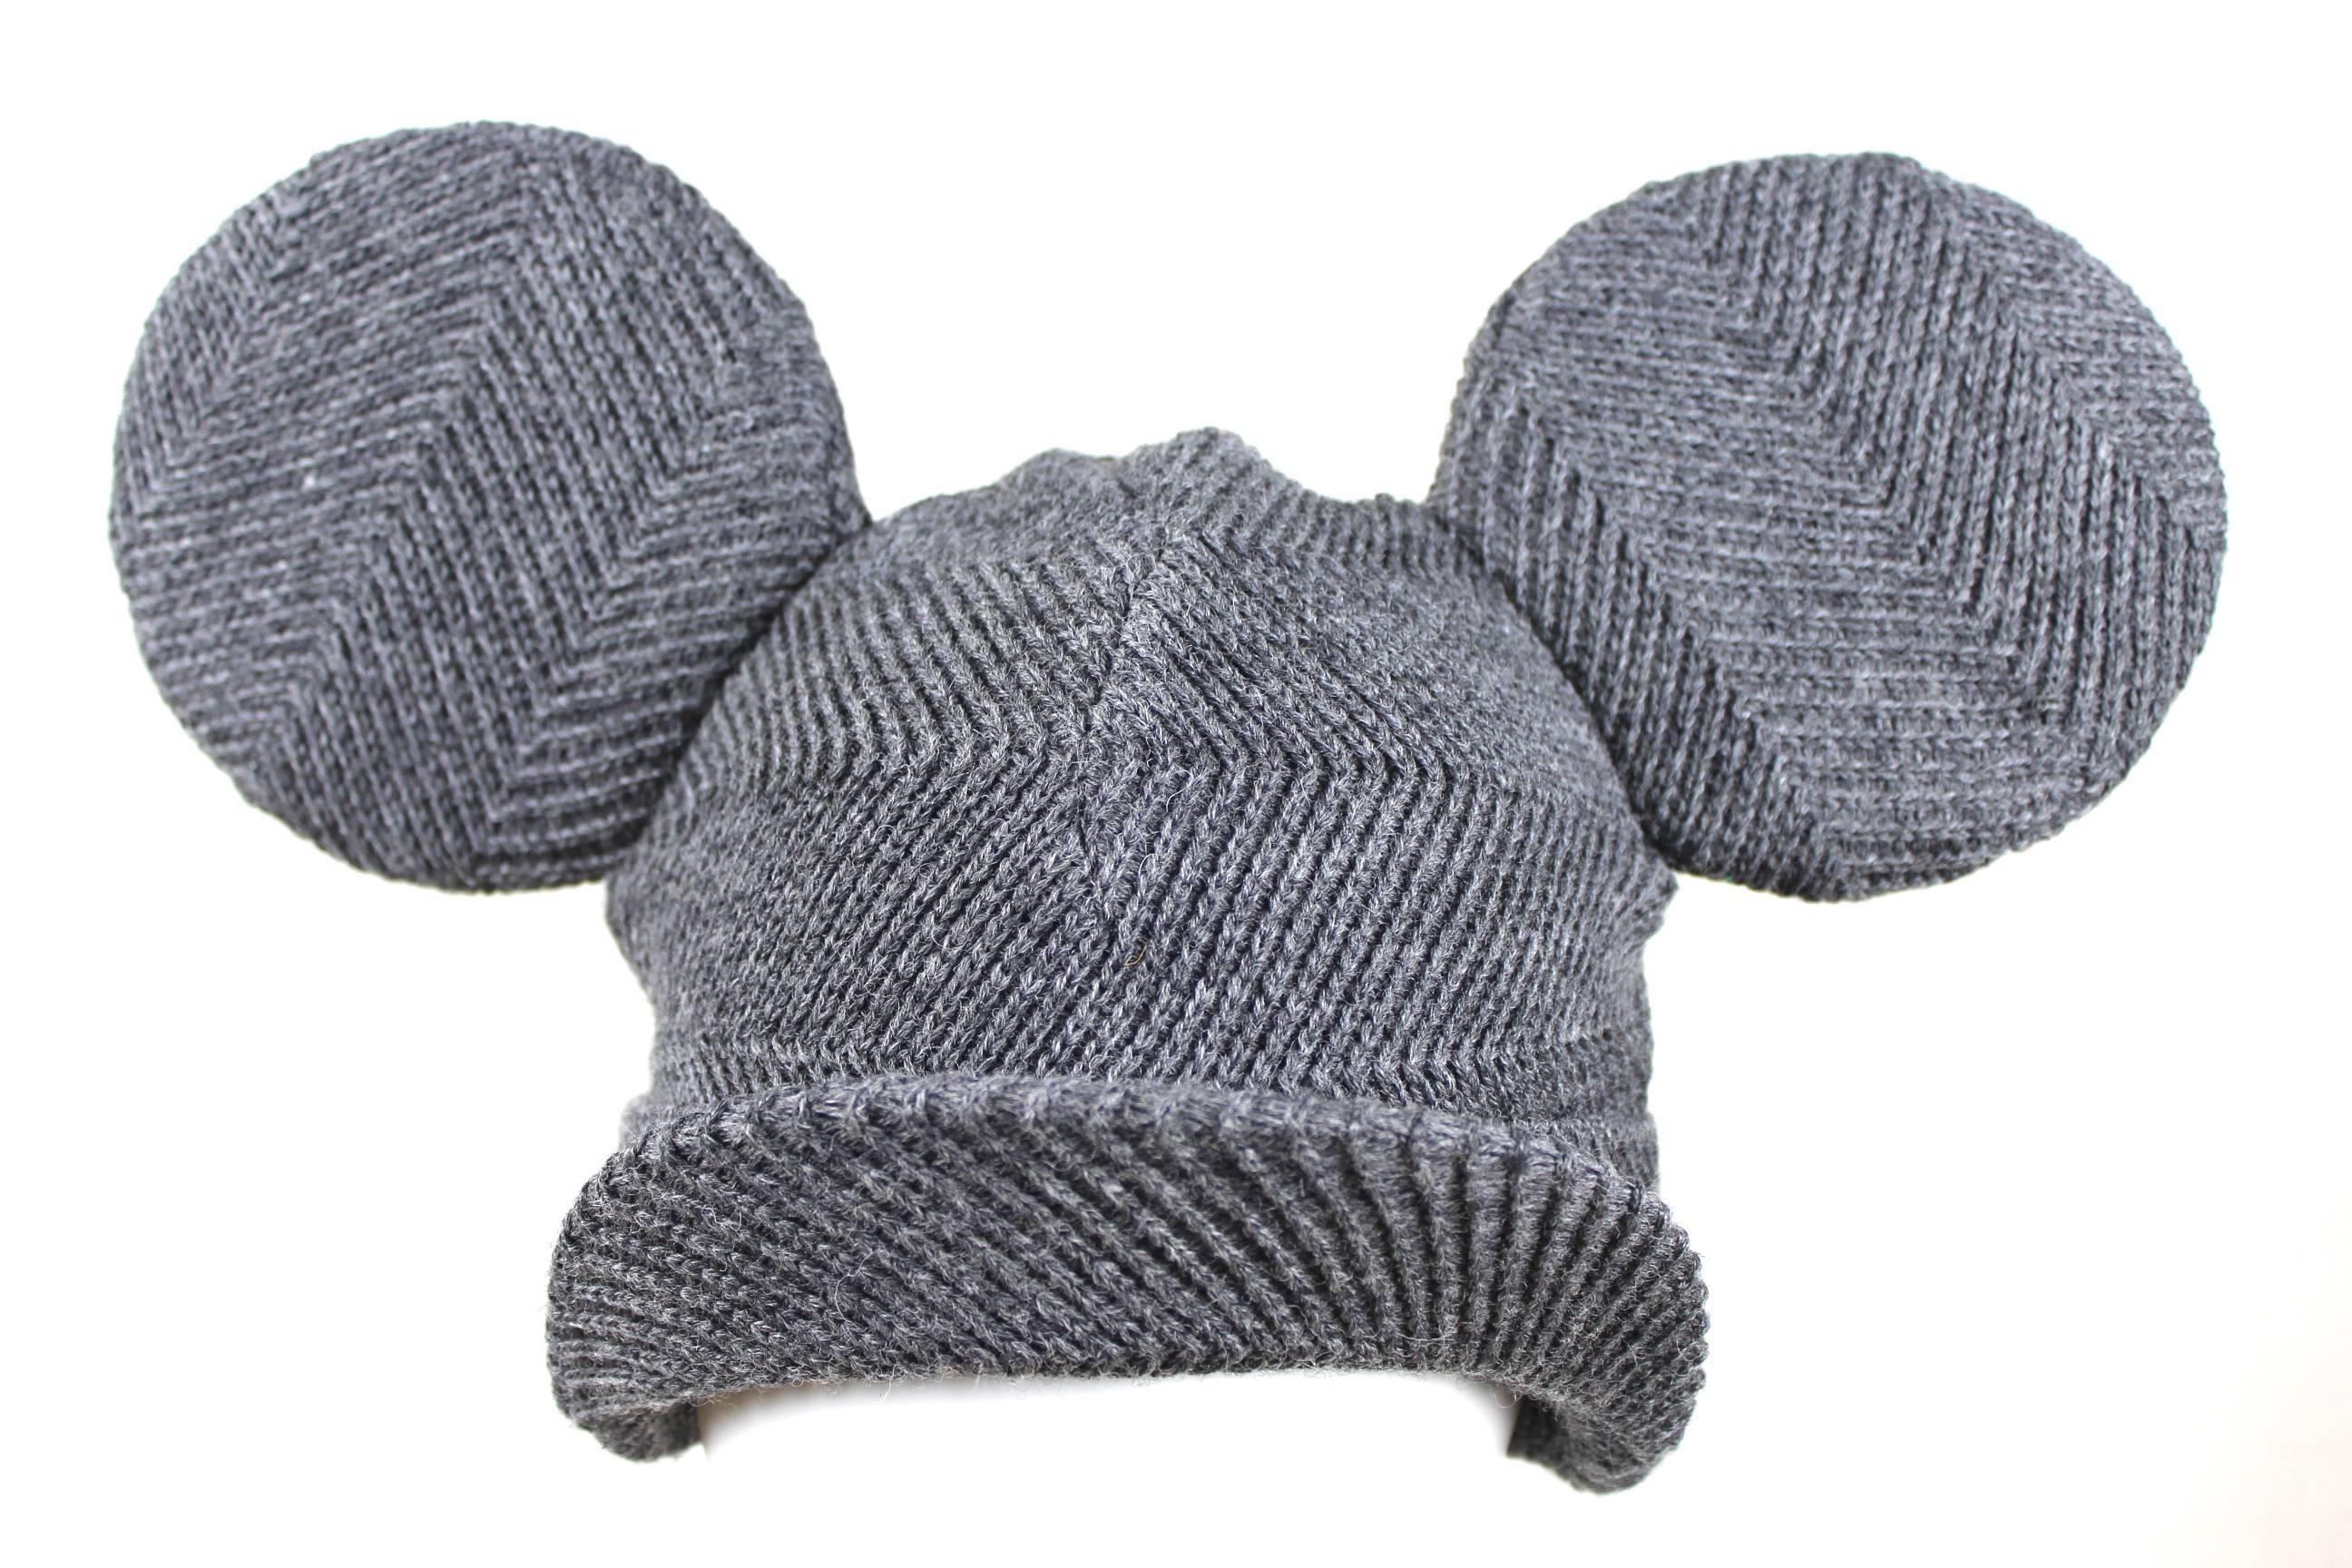 Comme des Garcons Mouse Ear Hat
Herringbone Knit Fabric
No size